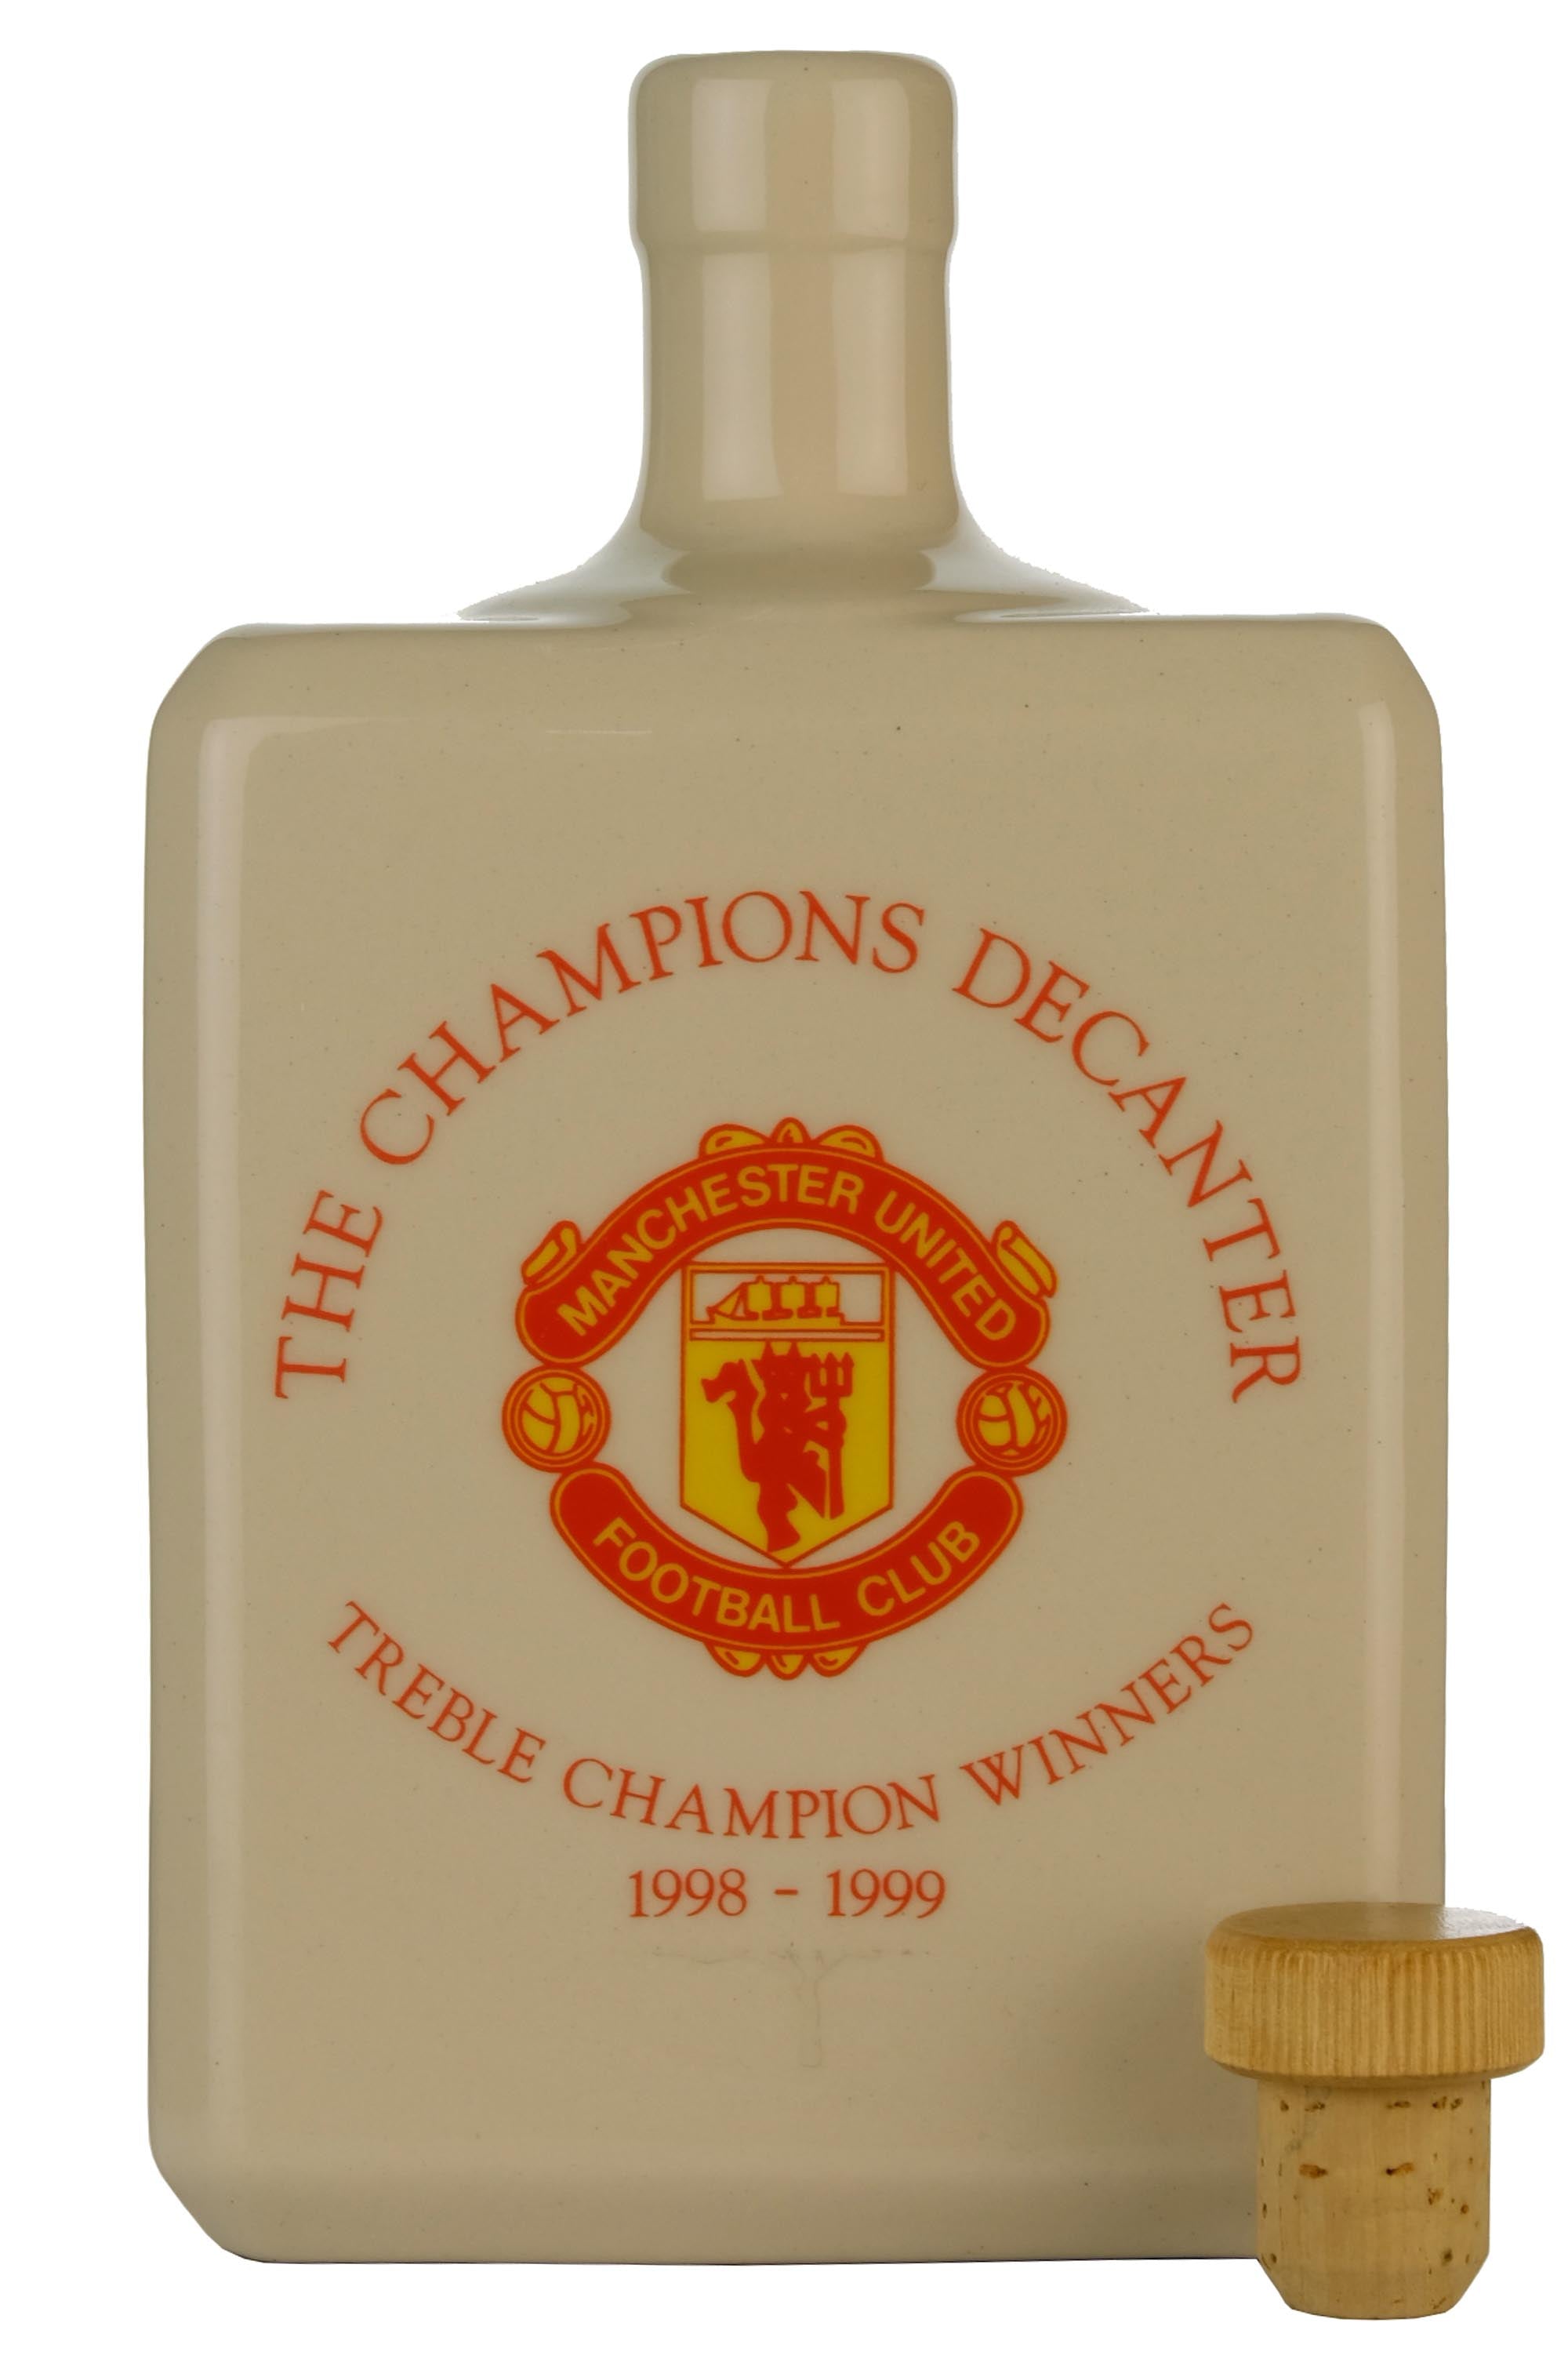 Manchester United Treble Champion Winners | The Champions Decanter